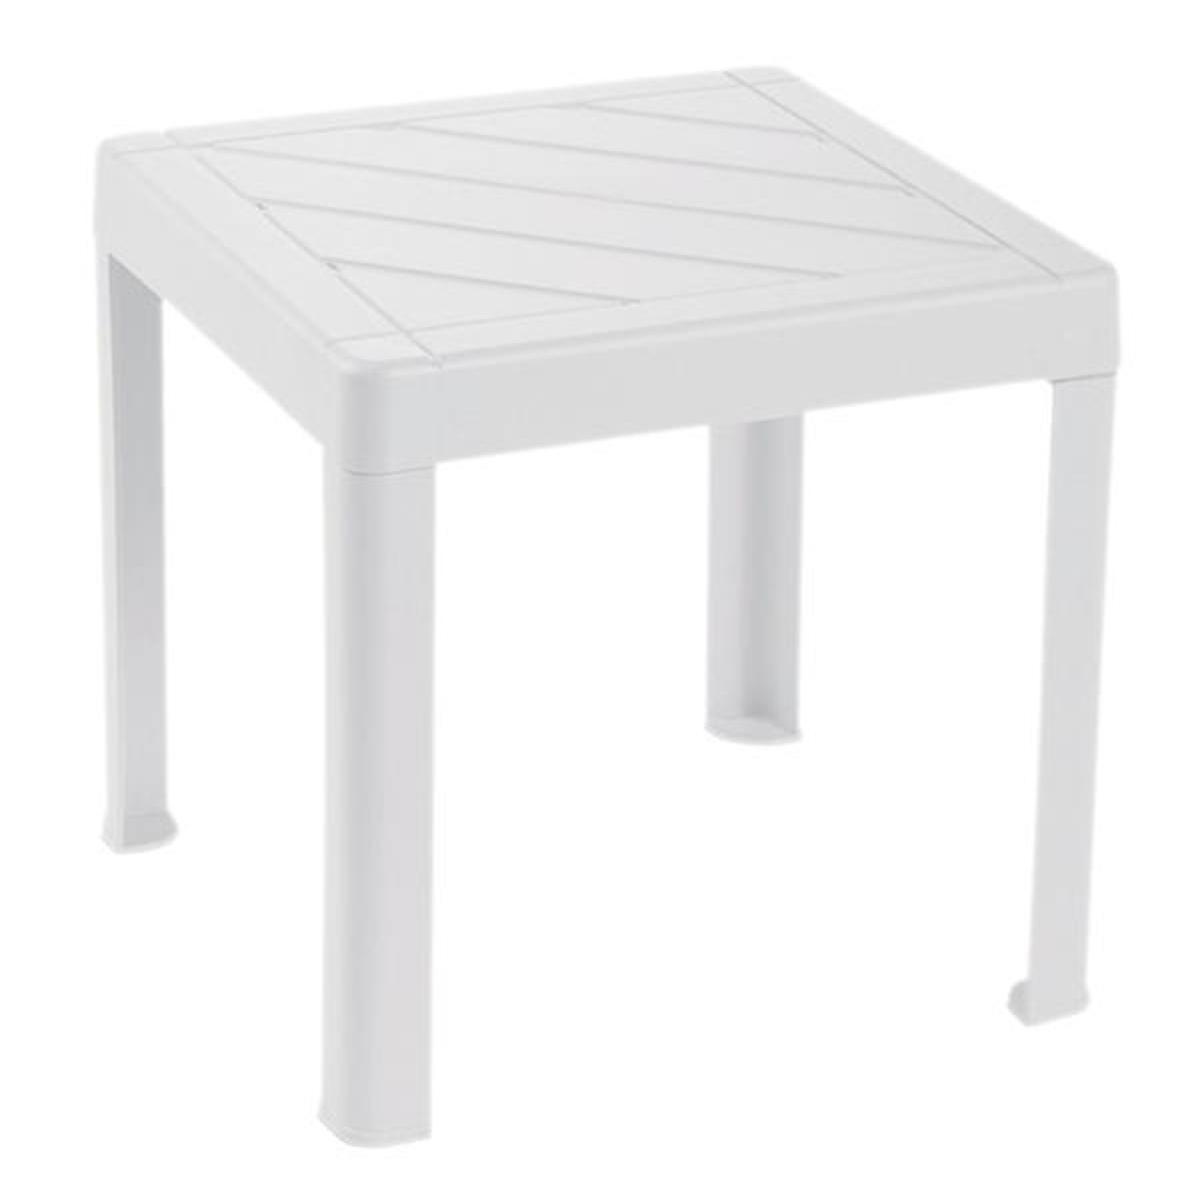 Table basse - 39 x 39 x H 38 cm - Blanc